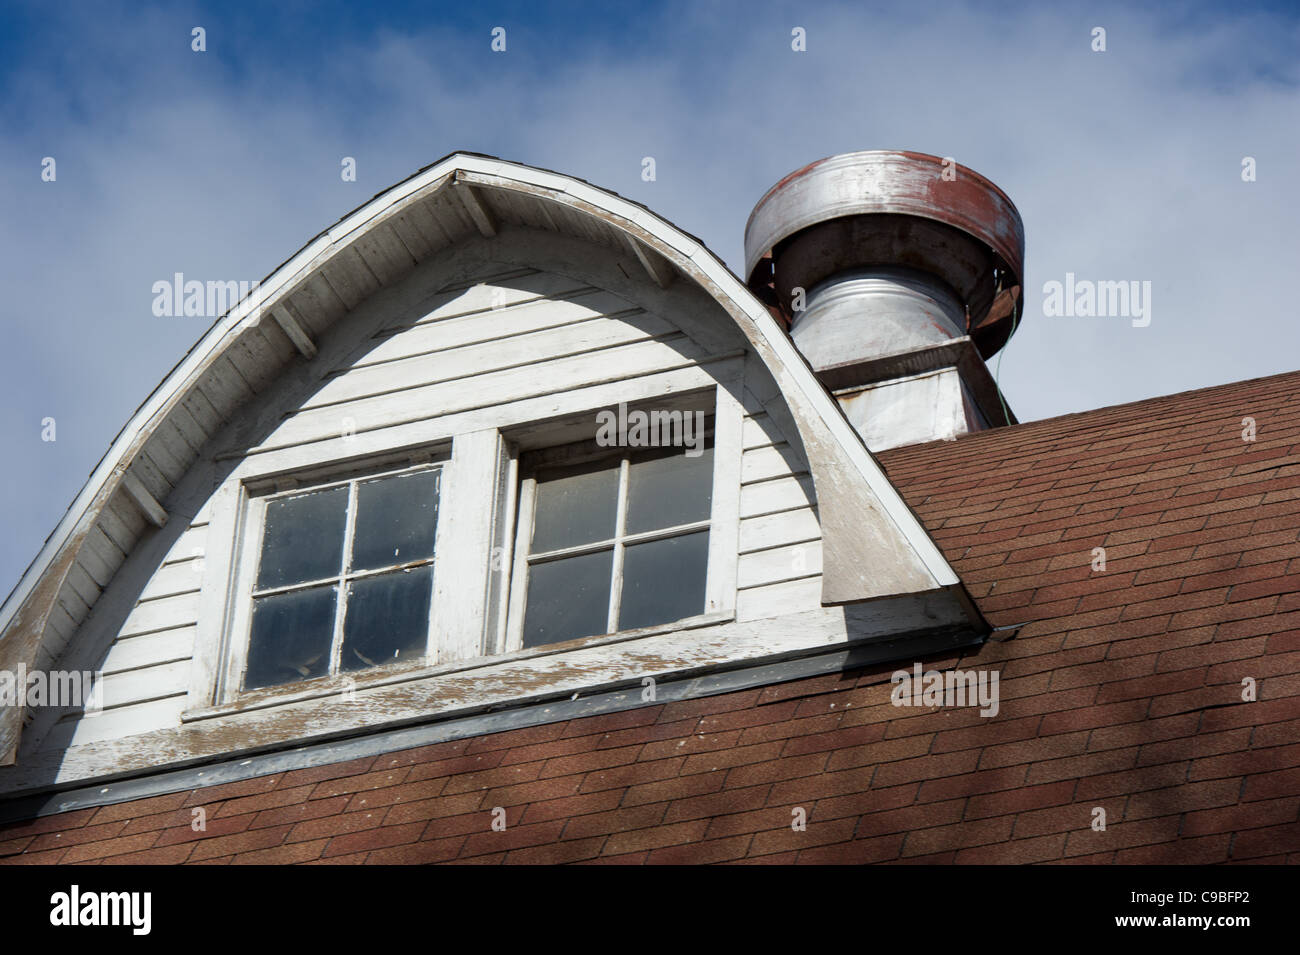 Dormer window on the top of a barn against blue sky Stock Photo